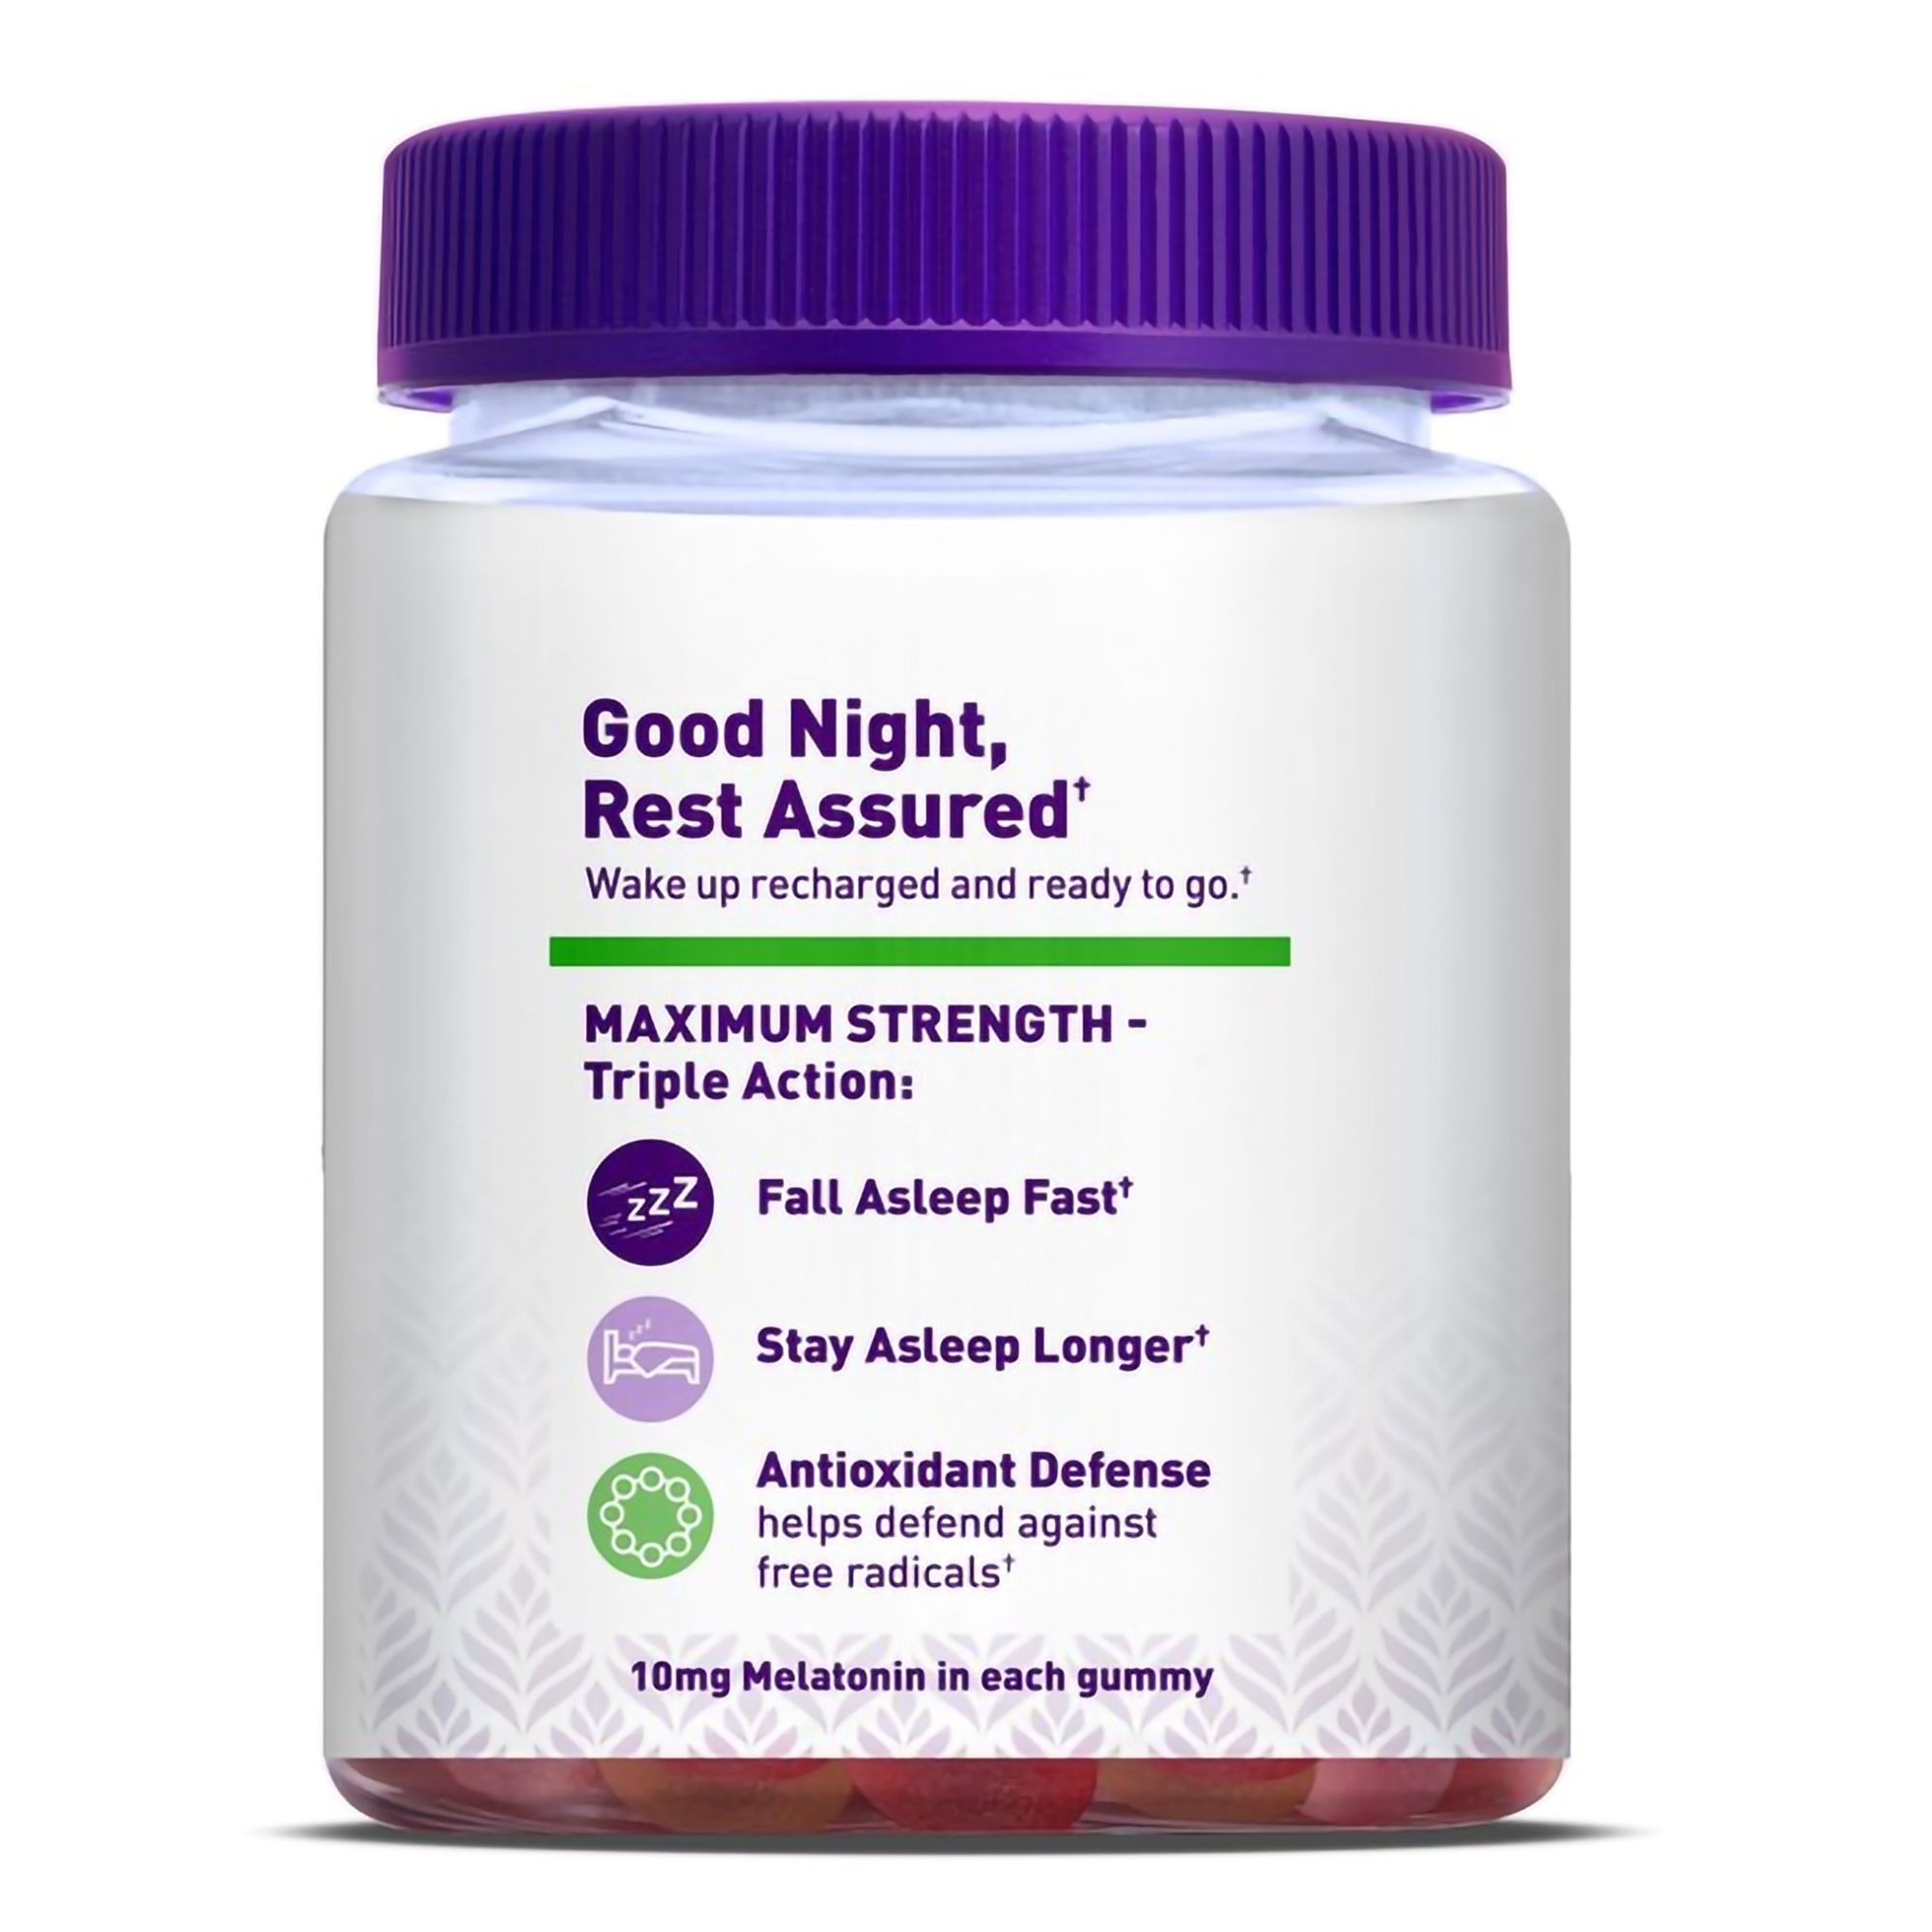 Natrol® MelatoninMax™ Sleep Aid Gummies, Blueberry, 10 mg - 50 ct